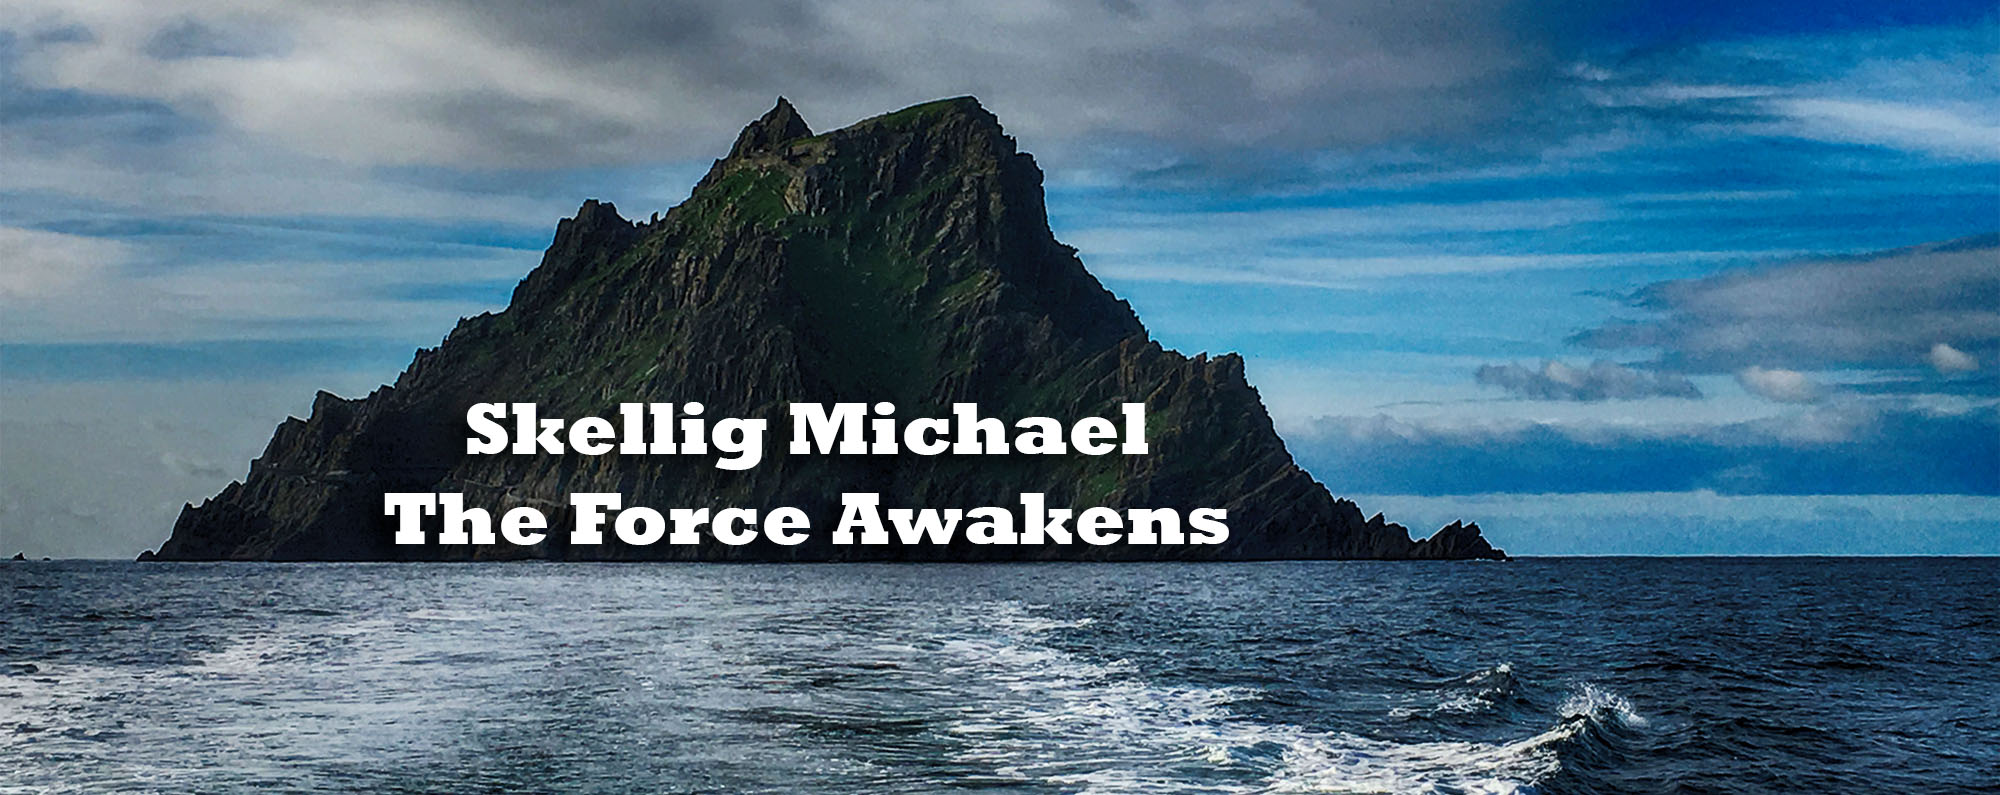 Skellig Michael The Force Awakens